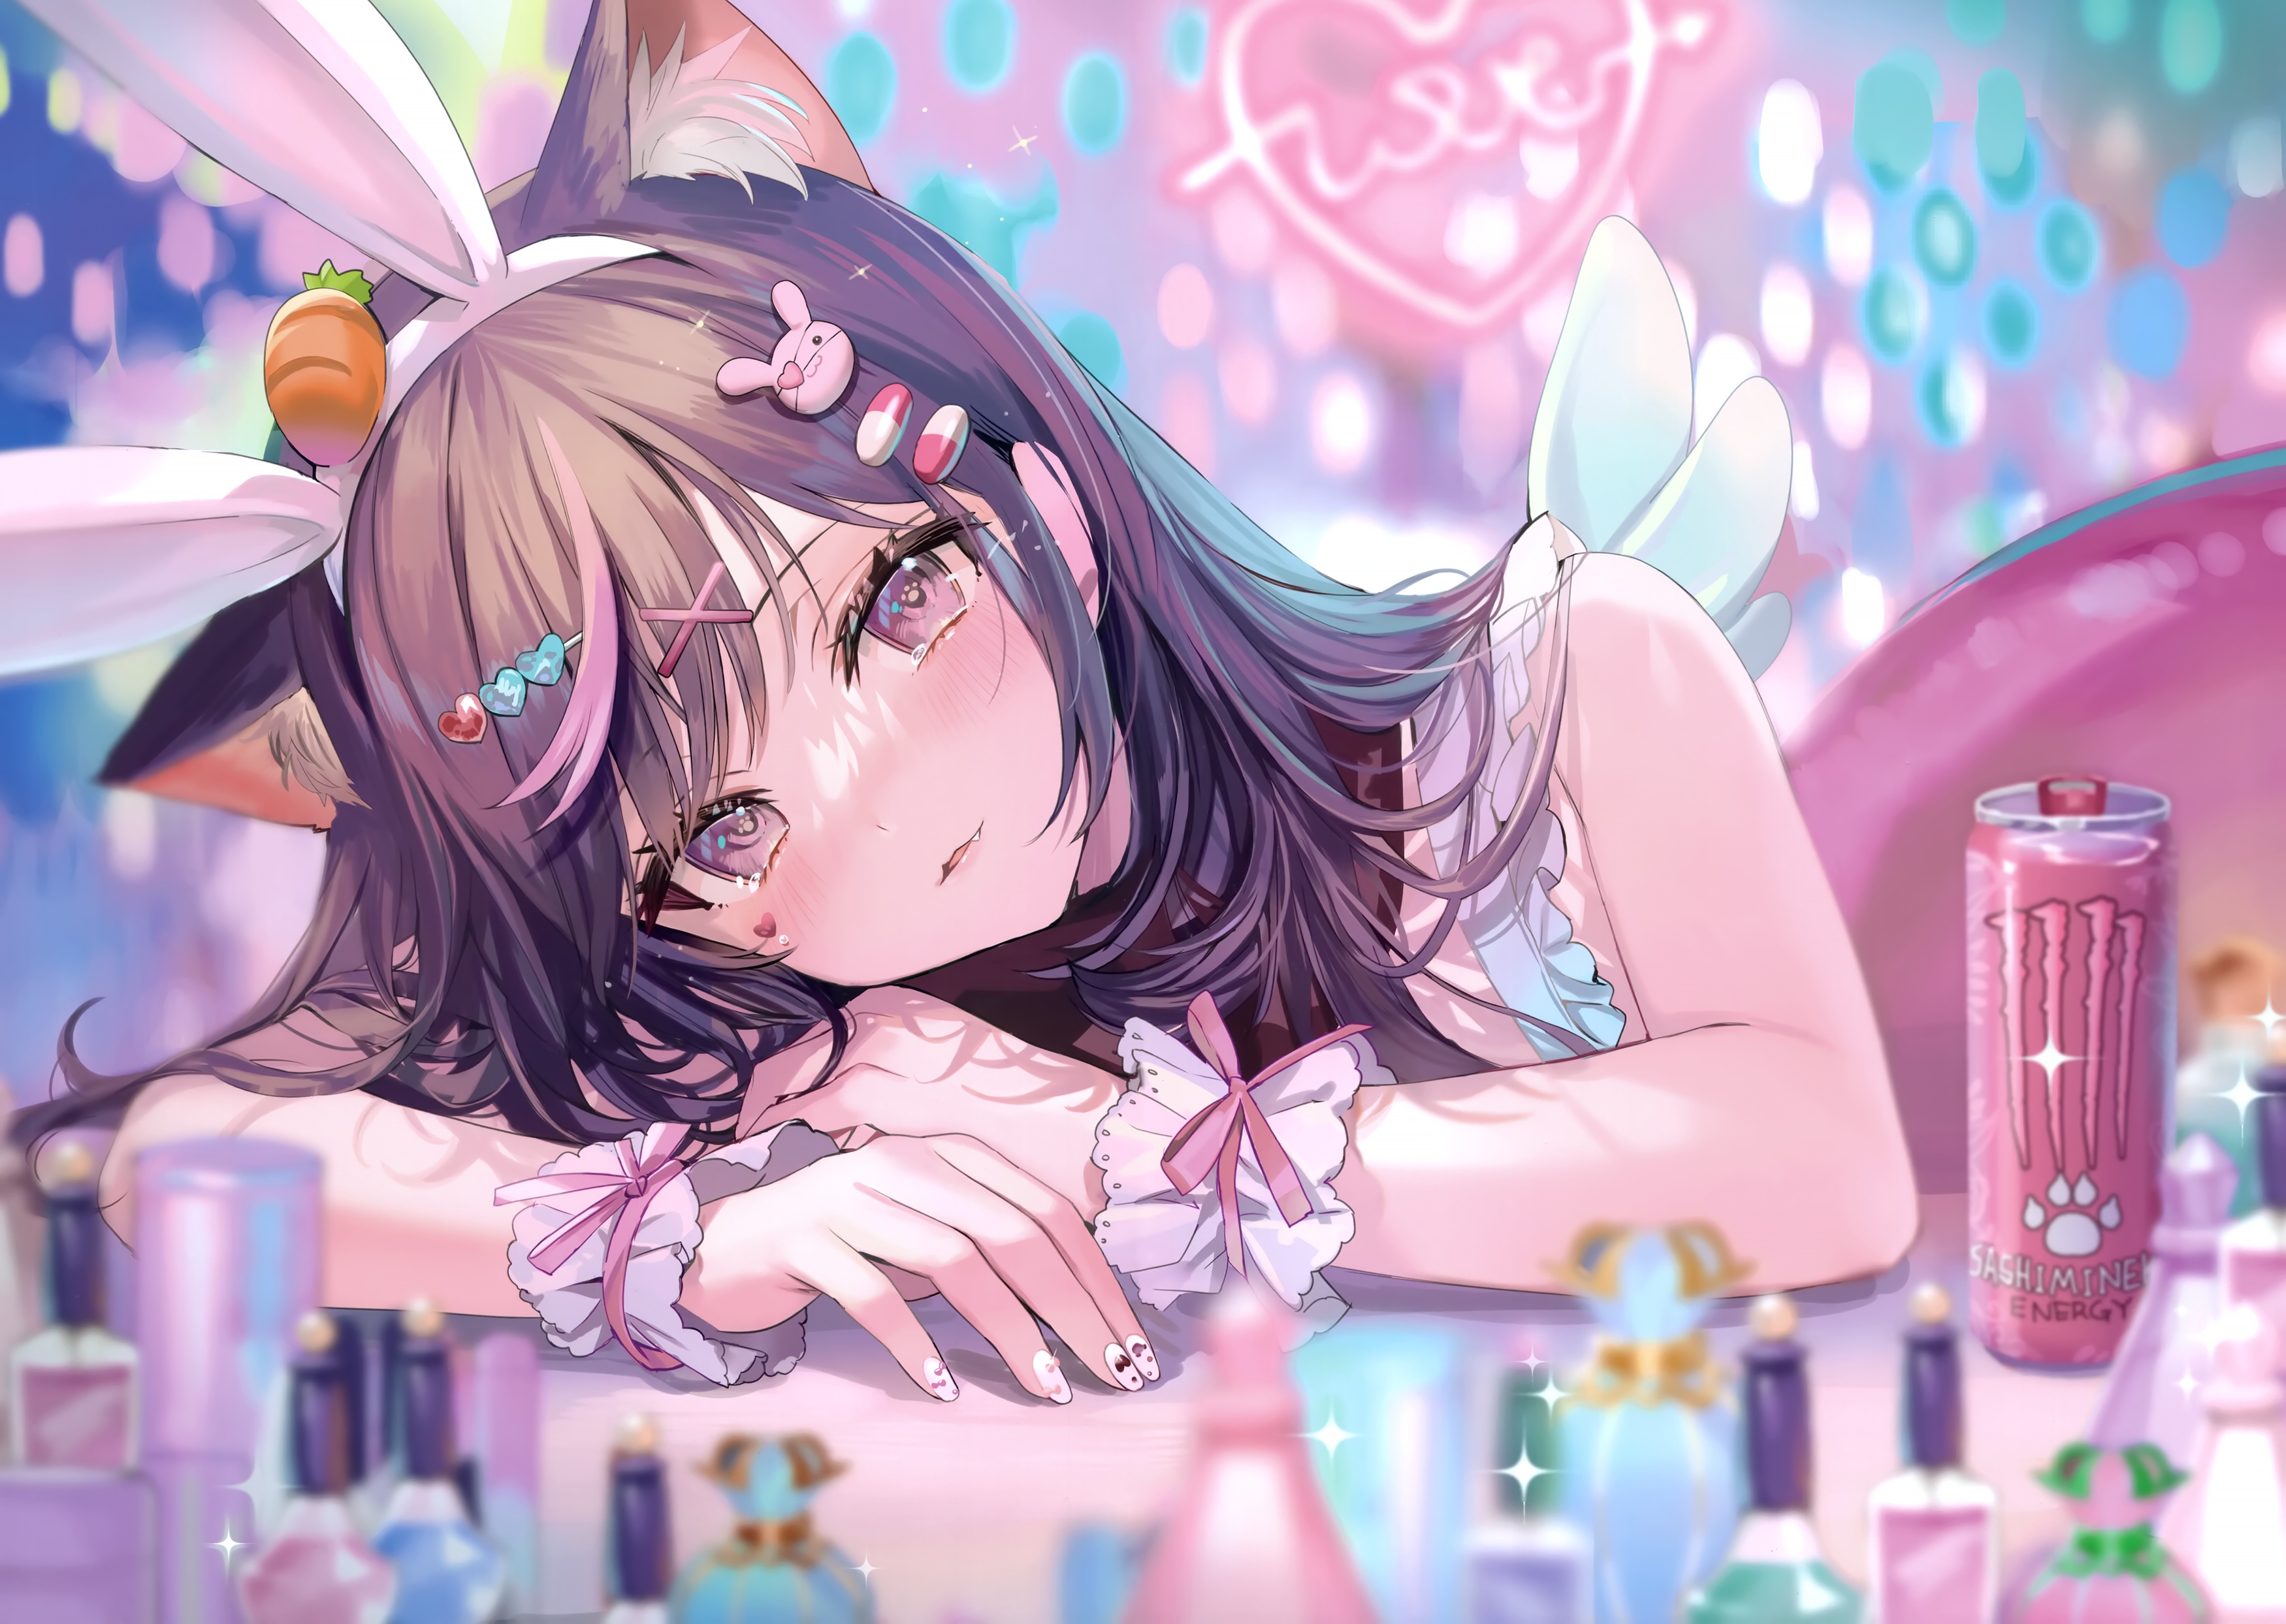 Anime 3500x2487 anime anime girls bunny ears makeup Monster Energy painted nails tears energy drinks cat girl cat ears